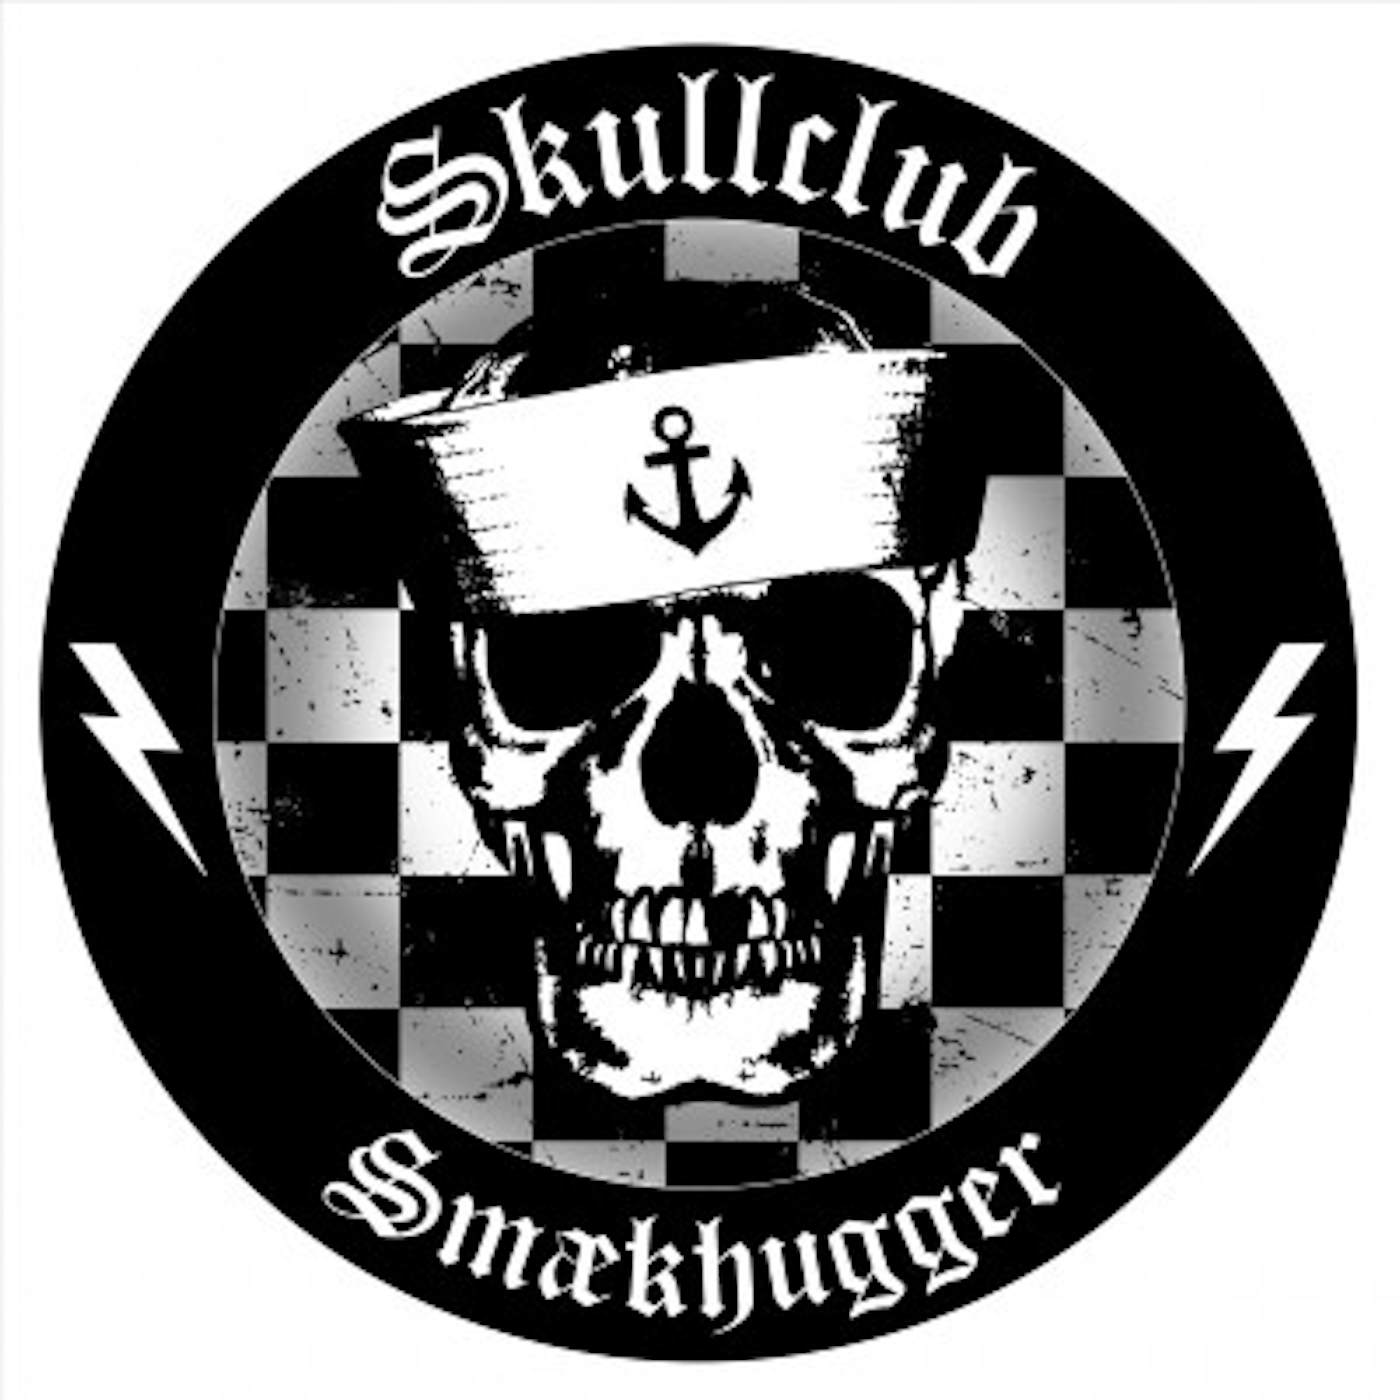 Skullclub Smaekhugger CD